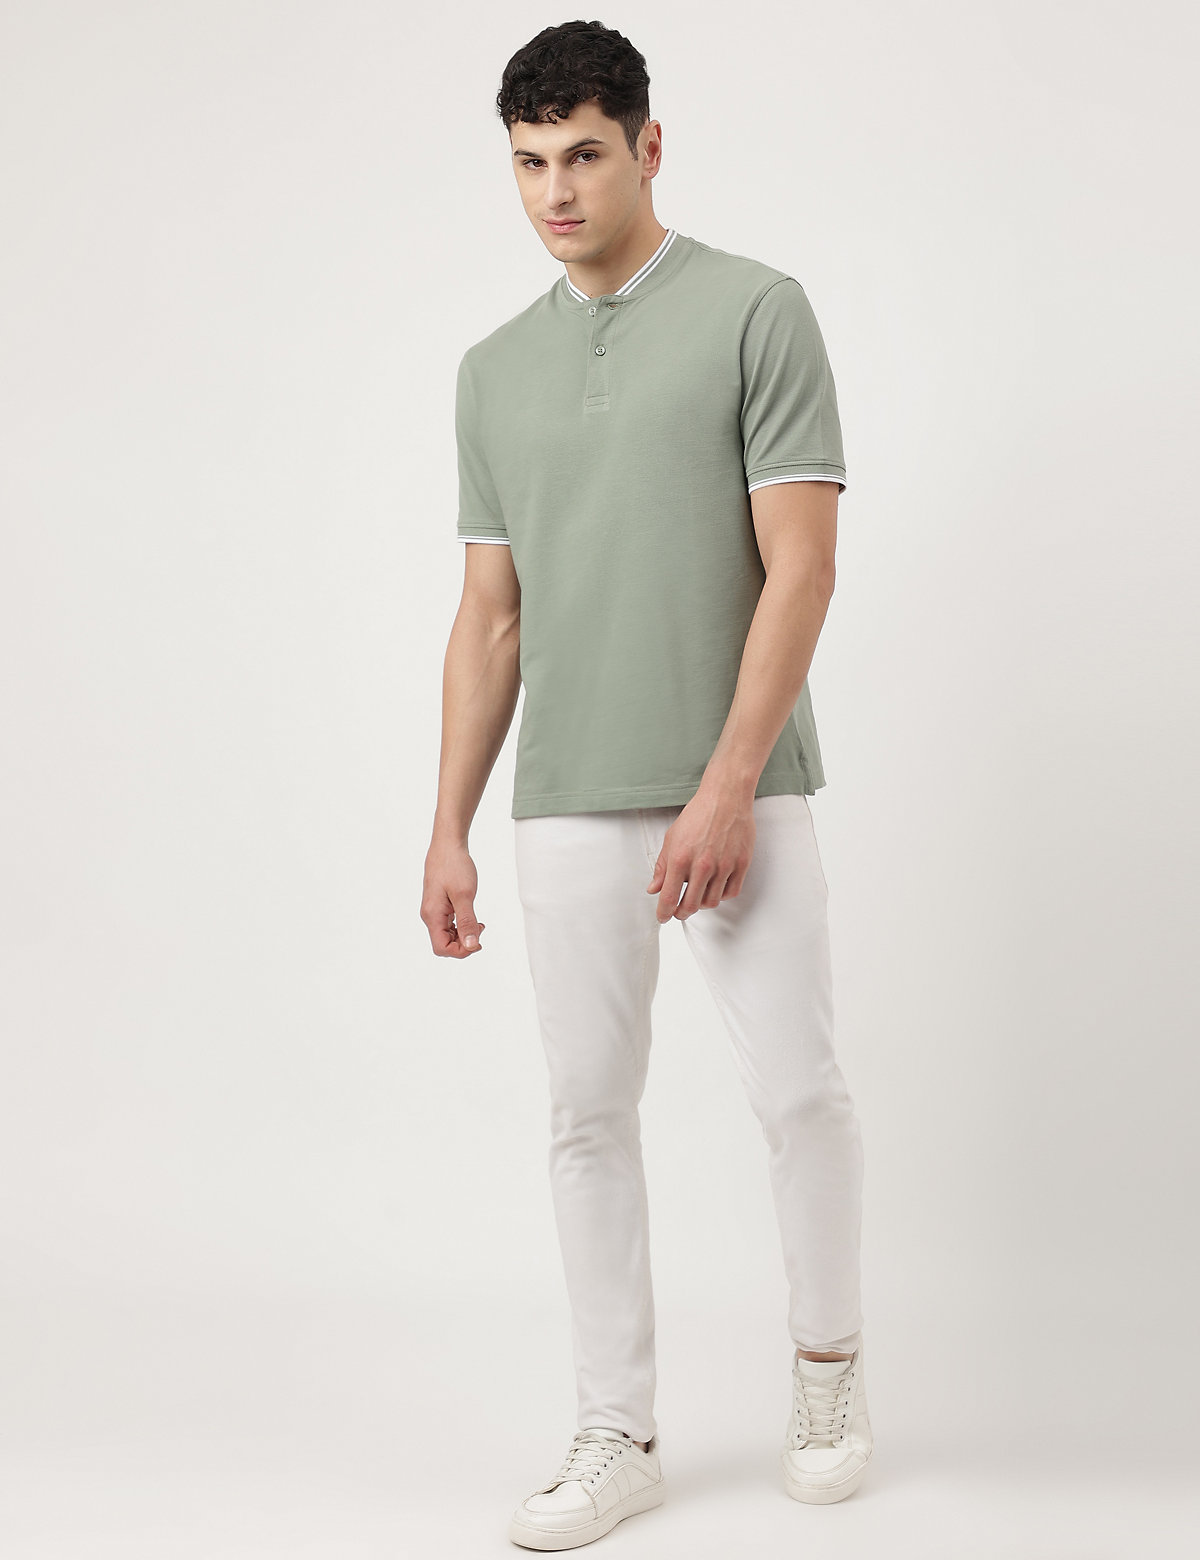 Cotton Plain Polo T-Shirt